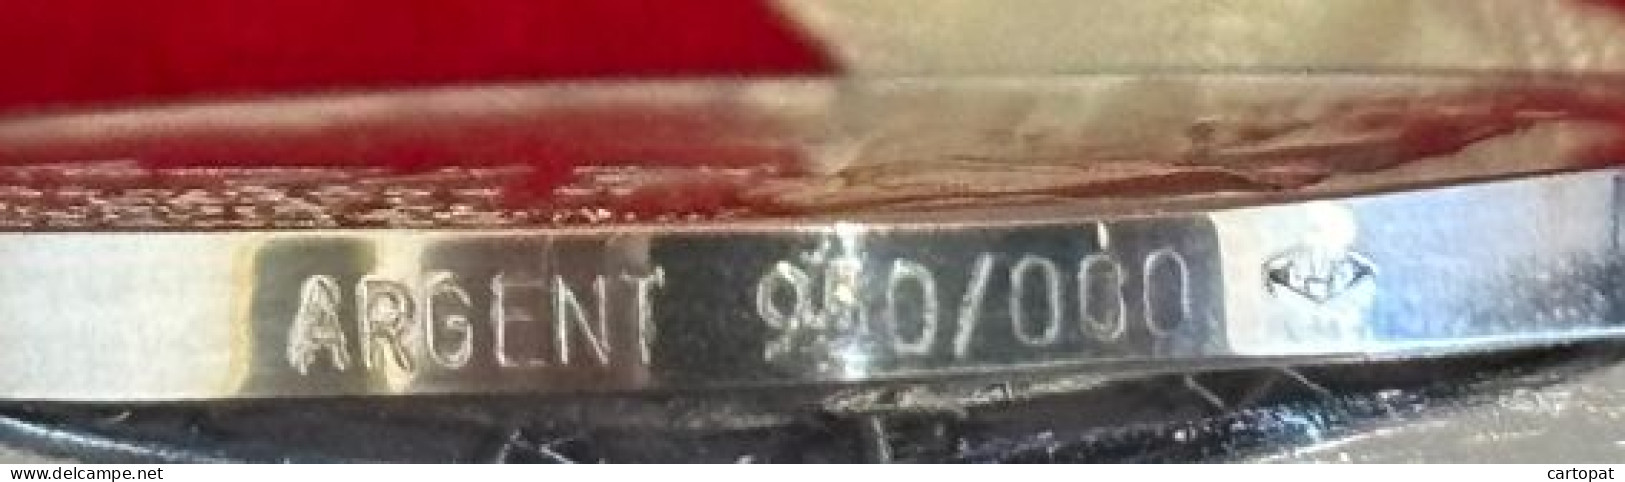 MEDAILLE COMMEMORATIVE DE JOHN KENNEDY EN AGENT 950/1000 DIAMETRE 39MM RARE! - Monarchia/ Nobiltà